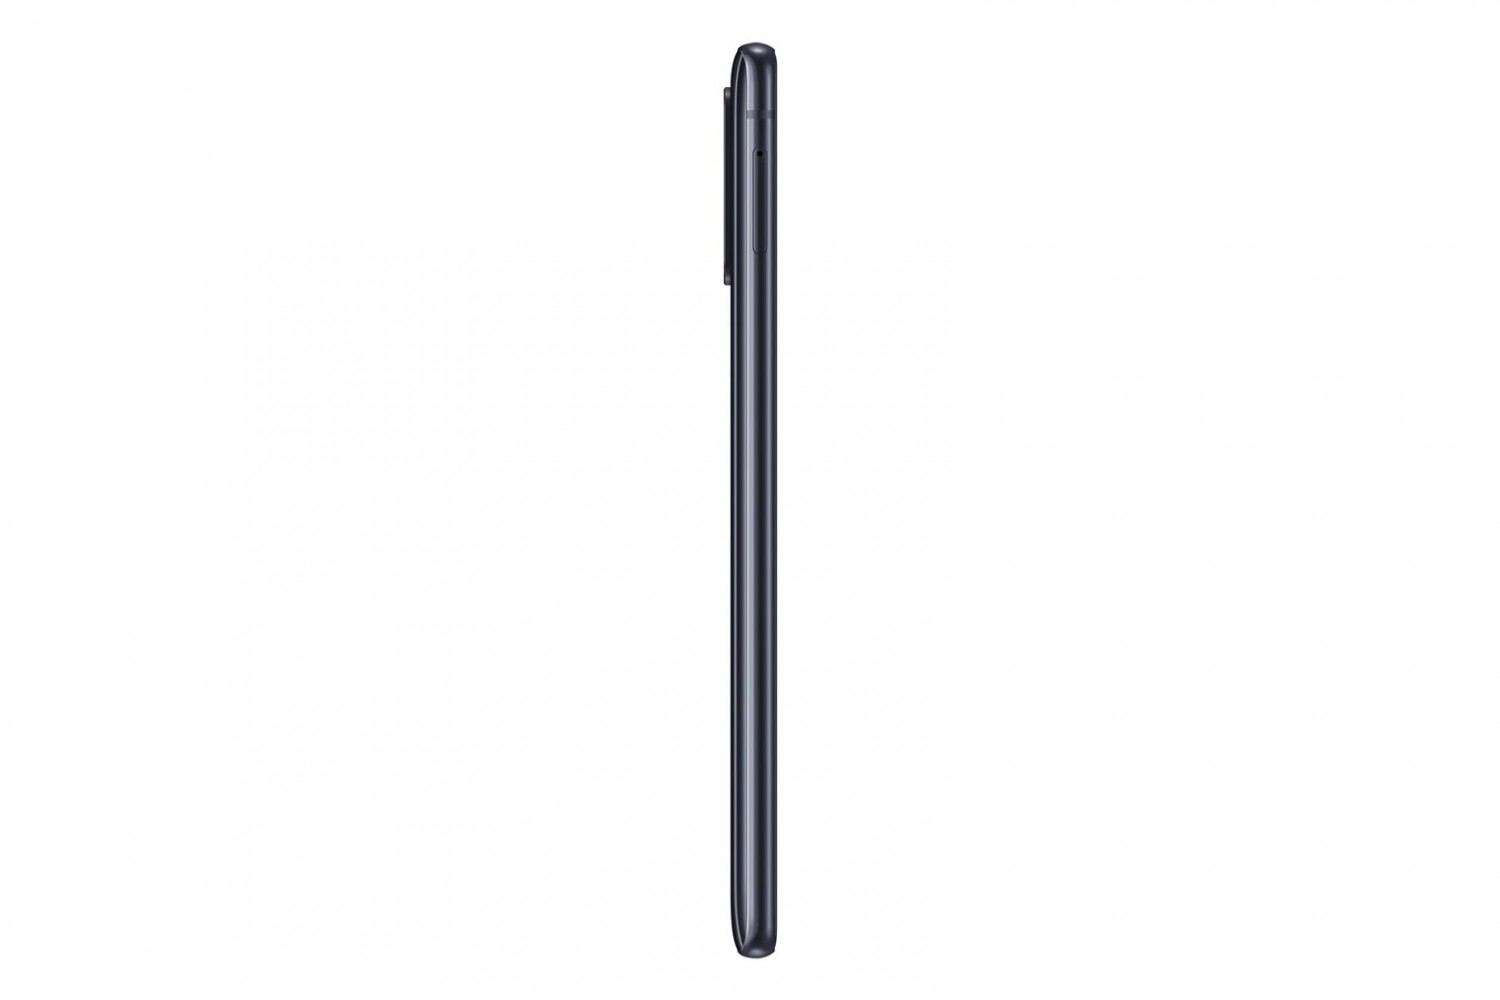 Samsung Galaxy S10 Lite SM-G770F 8GB/128GB černá